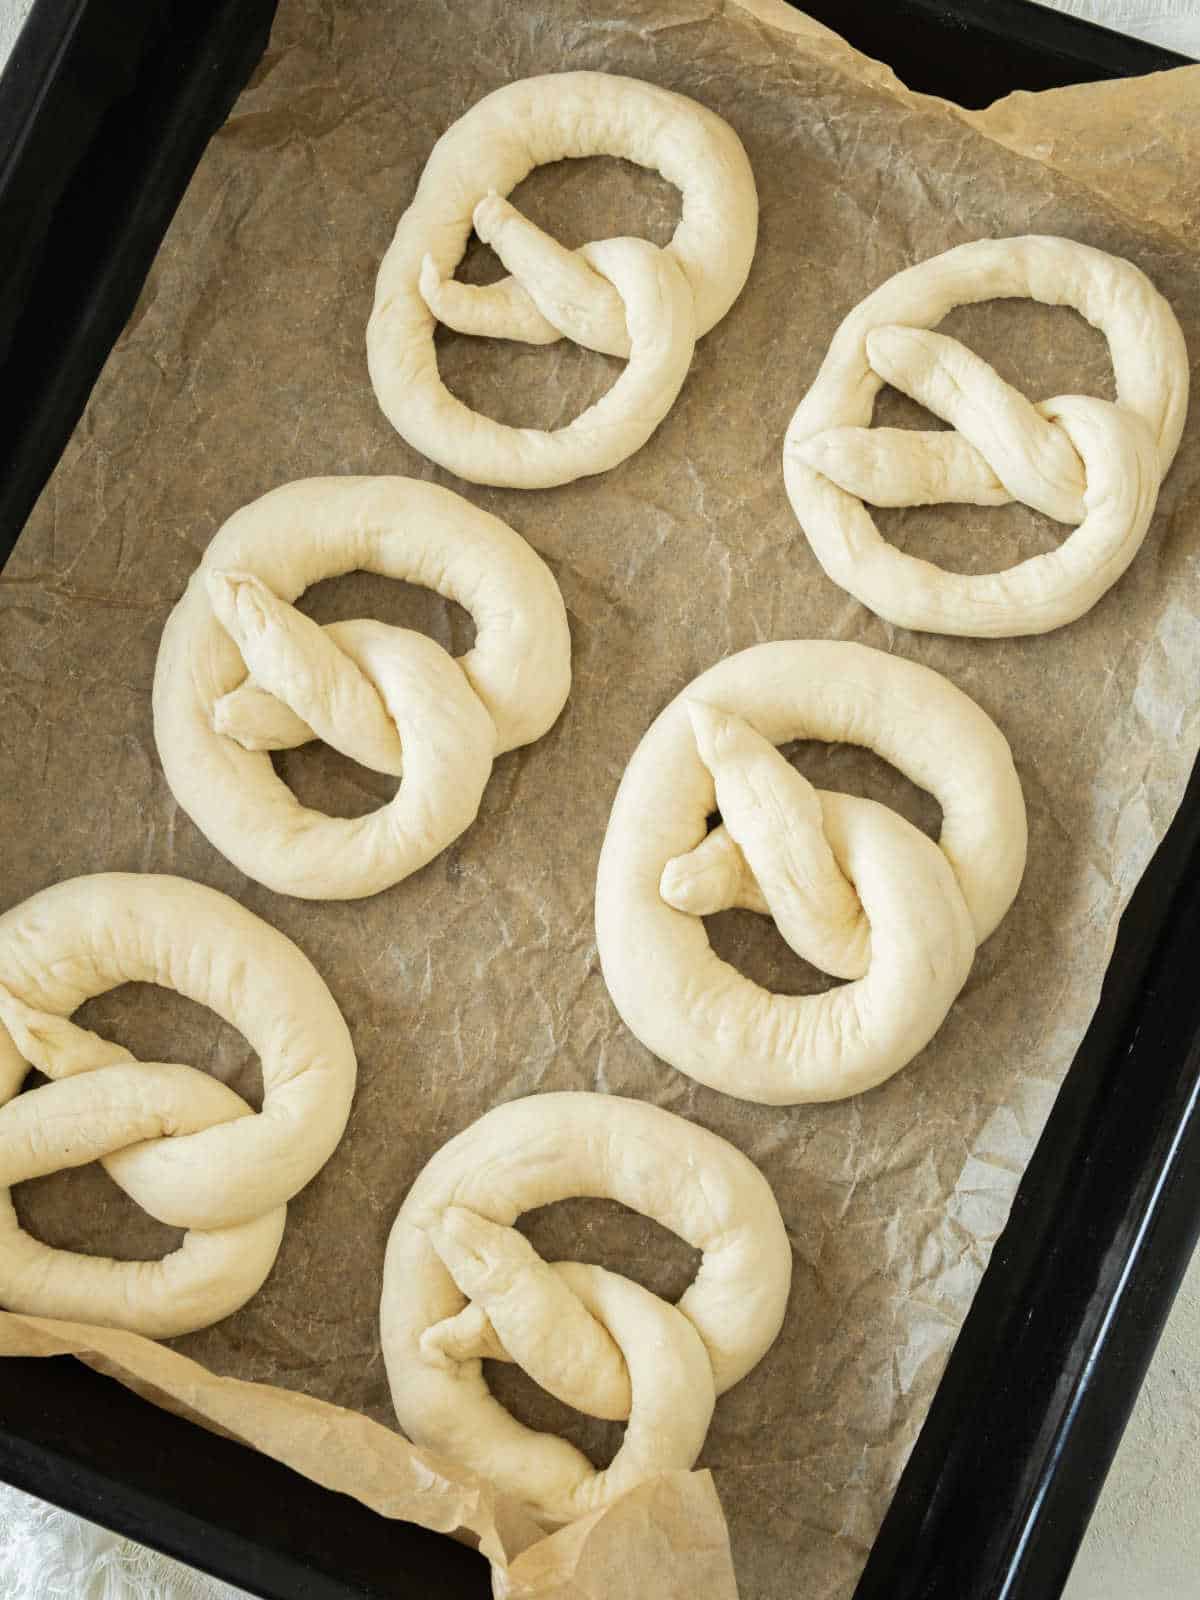 Formed pretzels on beige paper on a black oven tray.